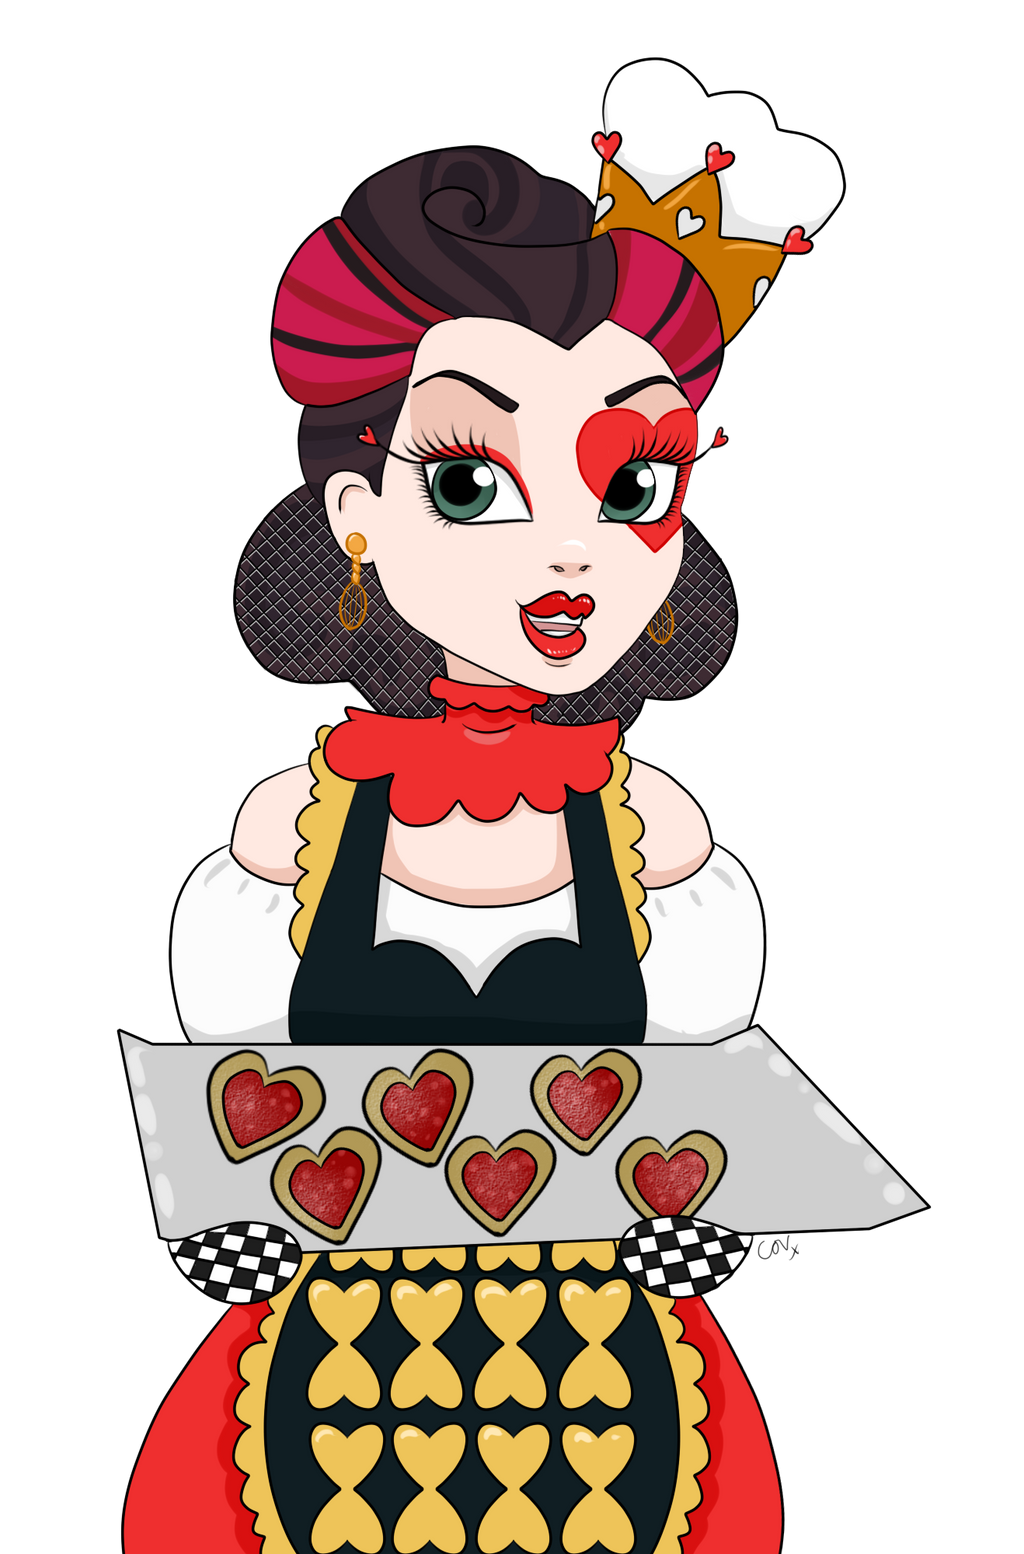 The Queen of Hearts Tarts!